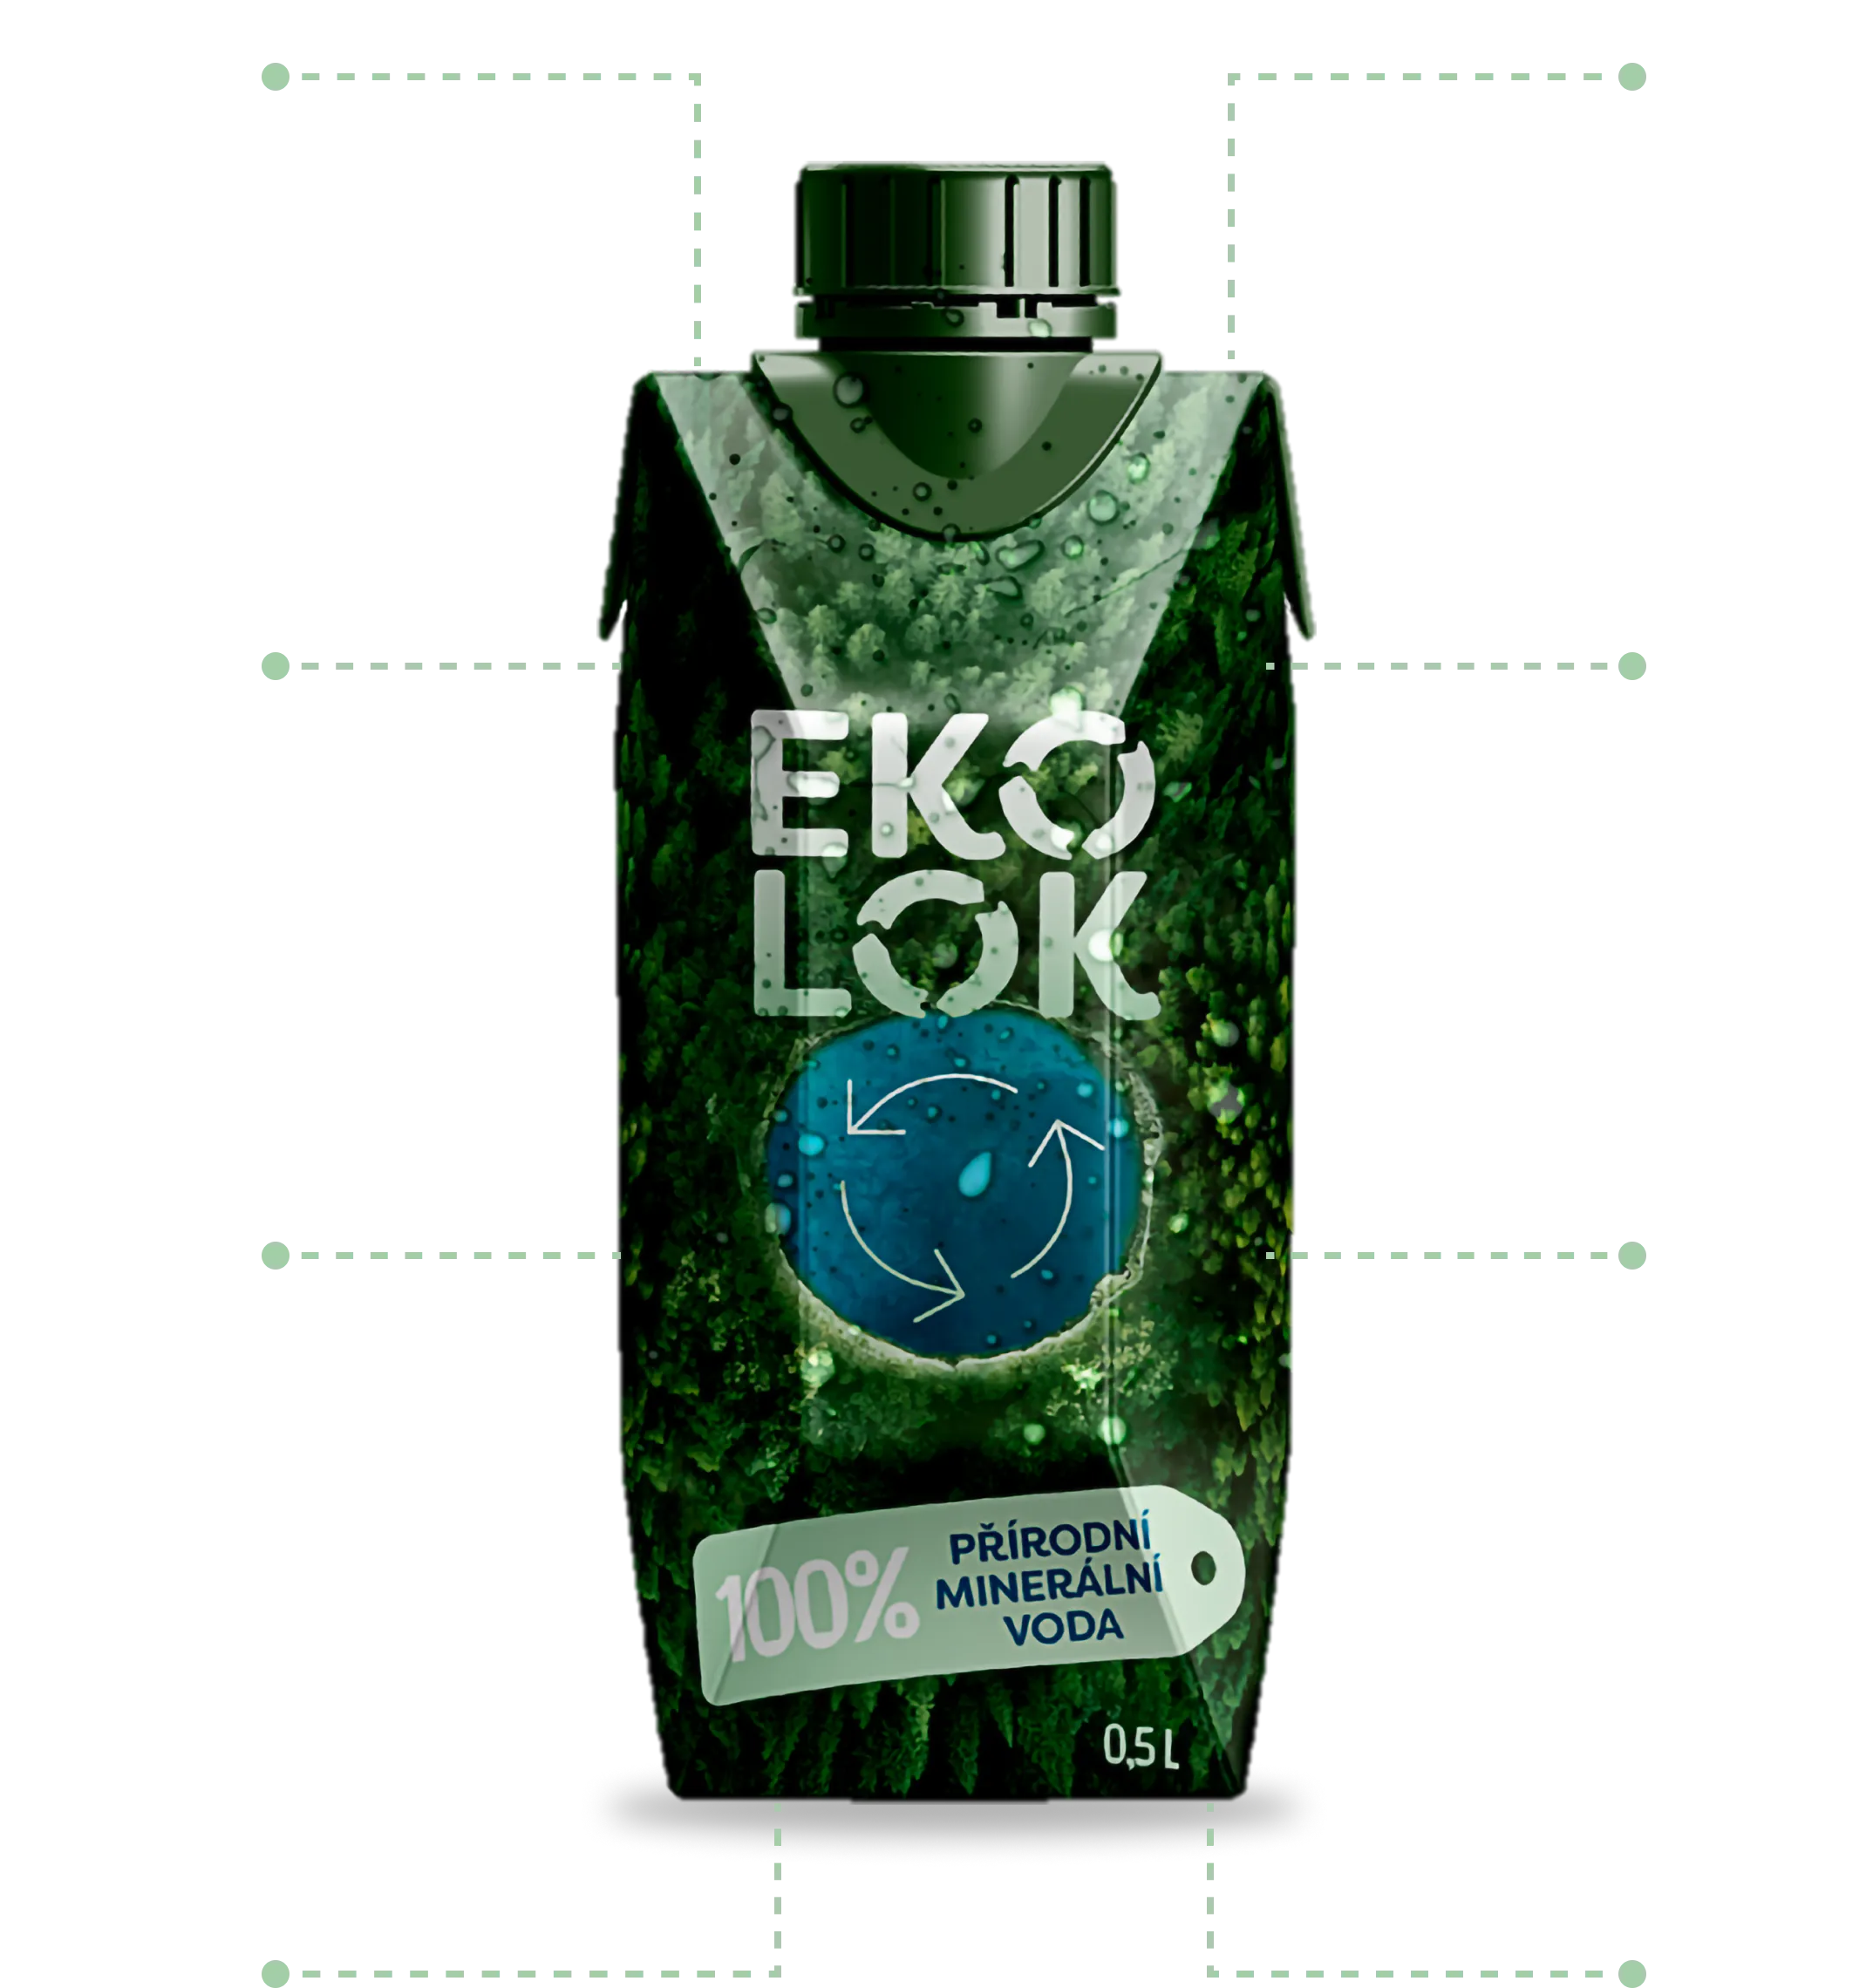 EKOLOK bottle group